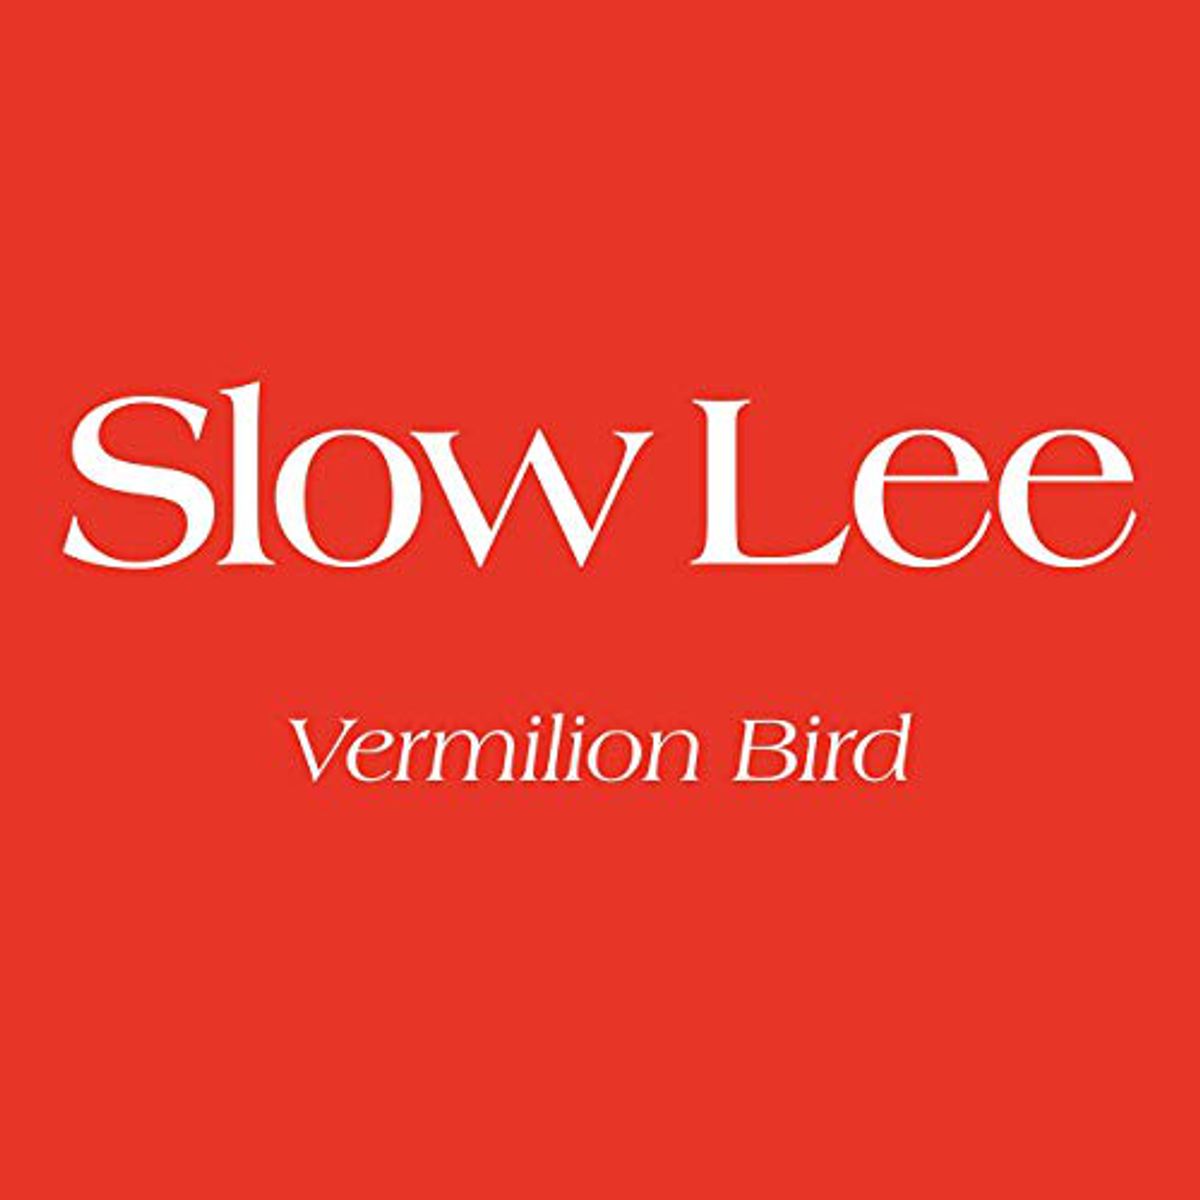 Slow Lee - Vermillion Bird